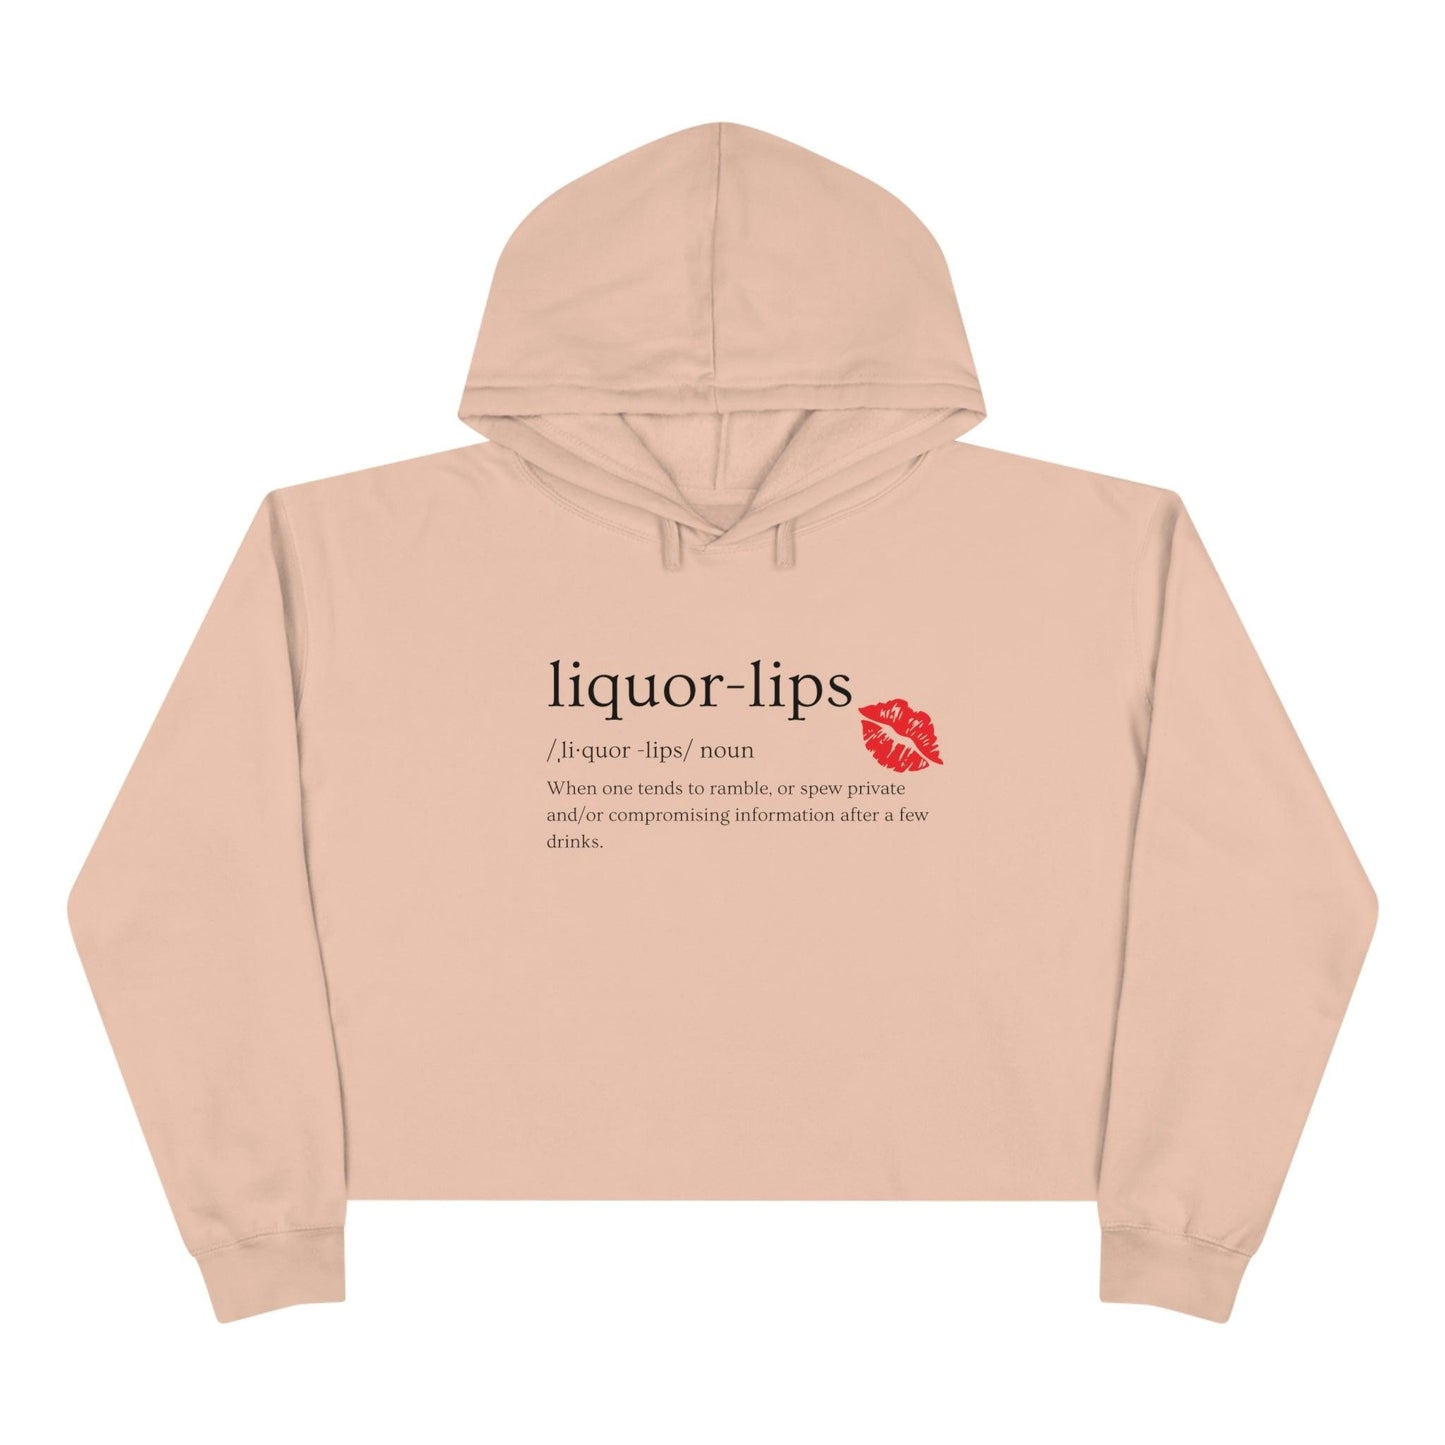 Liquor Lips definition Crop Hoodie, Bachelorette Party Shirt - Lickerlips Lip Balms